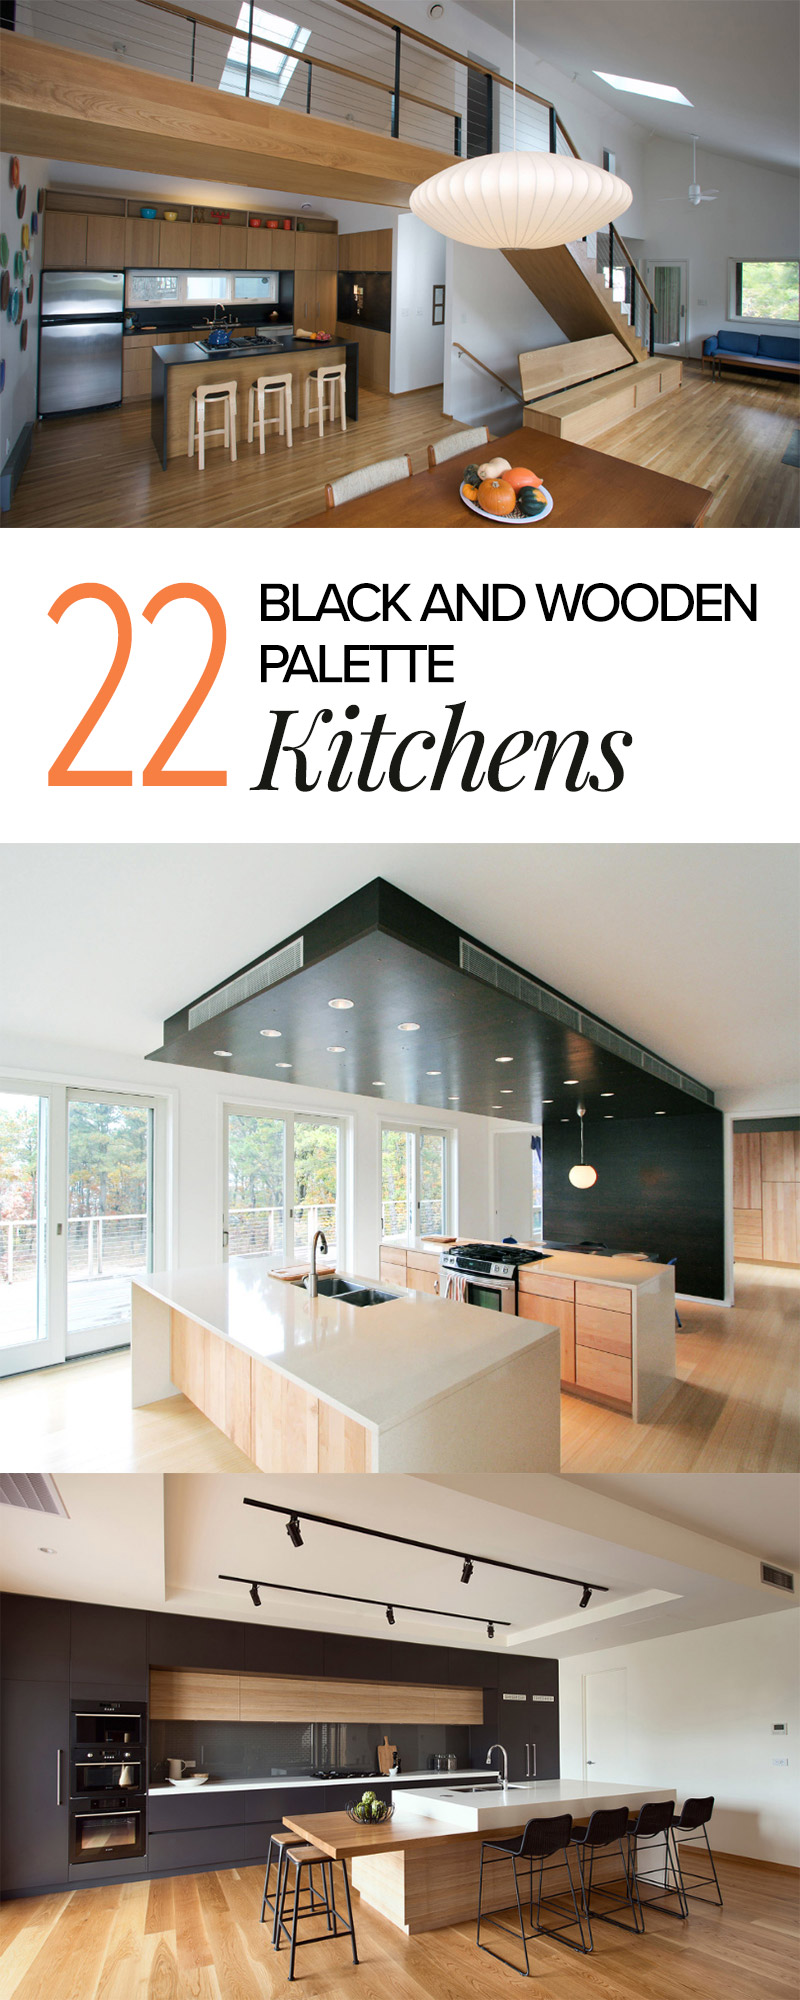 Best Kitchen Ideas cover image